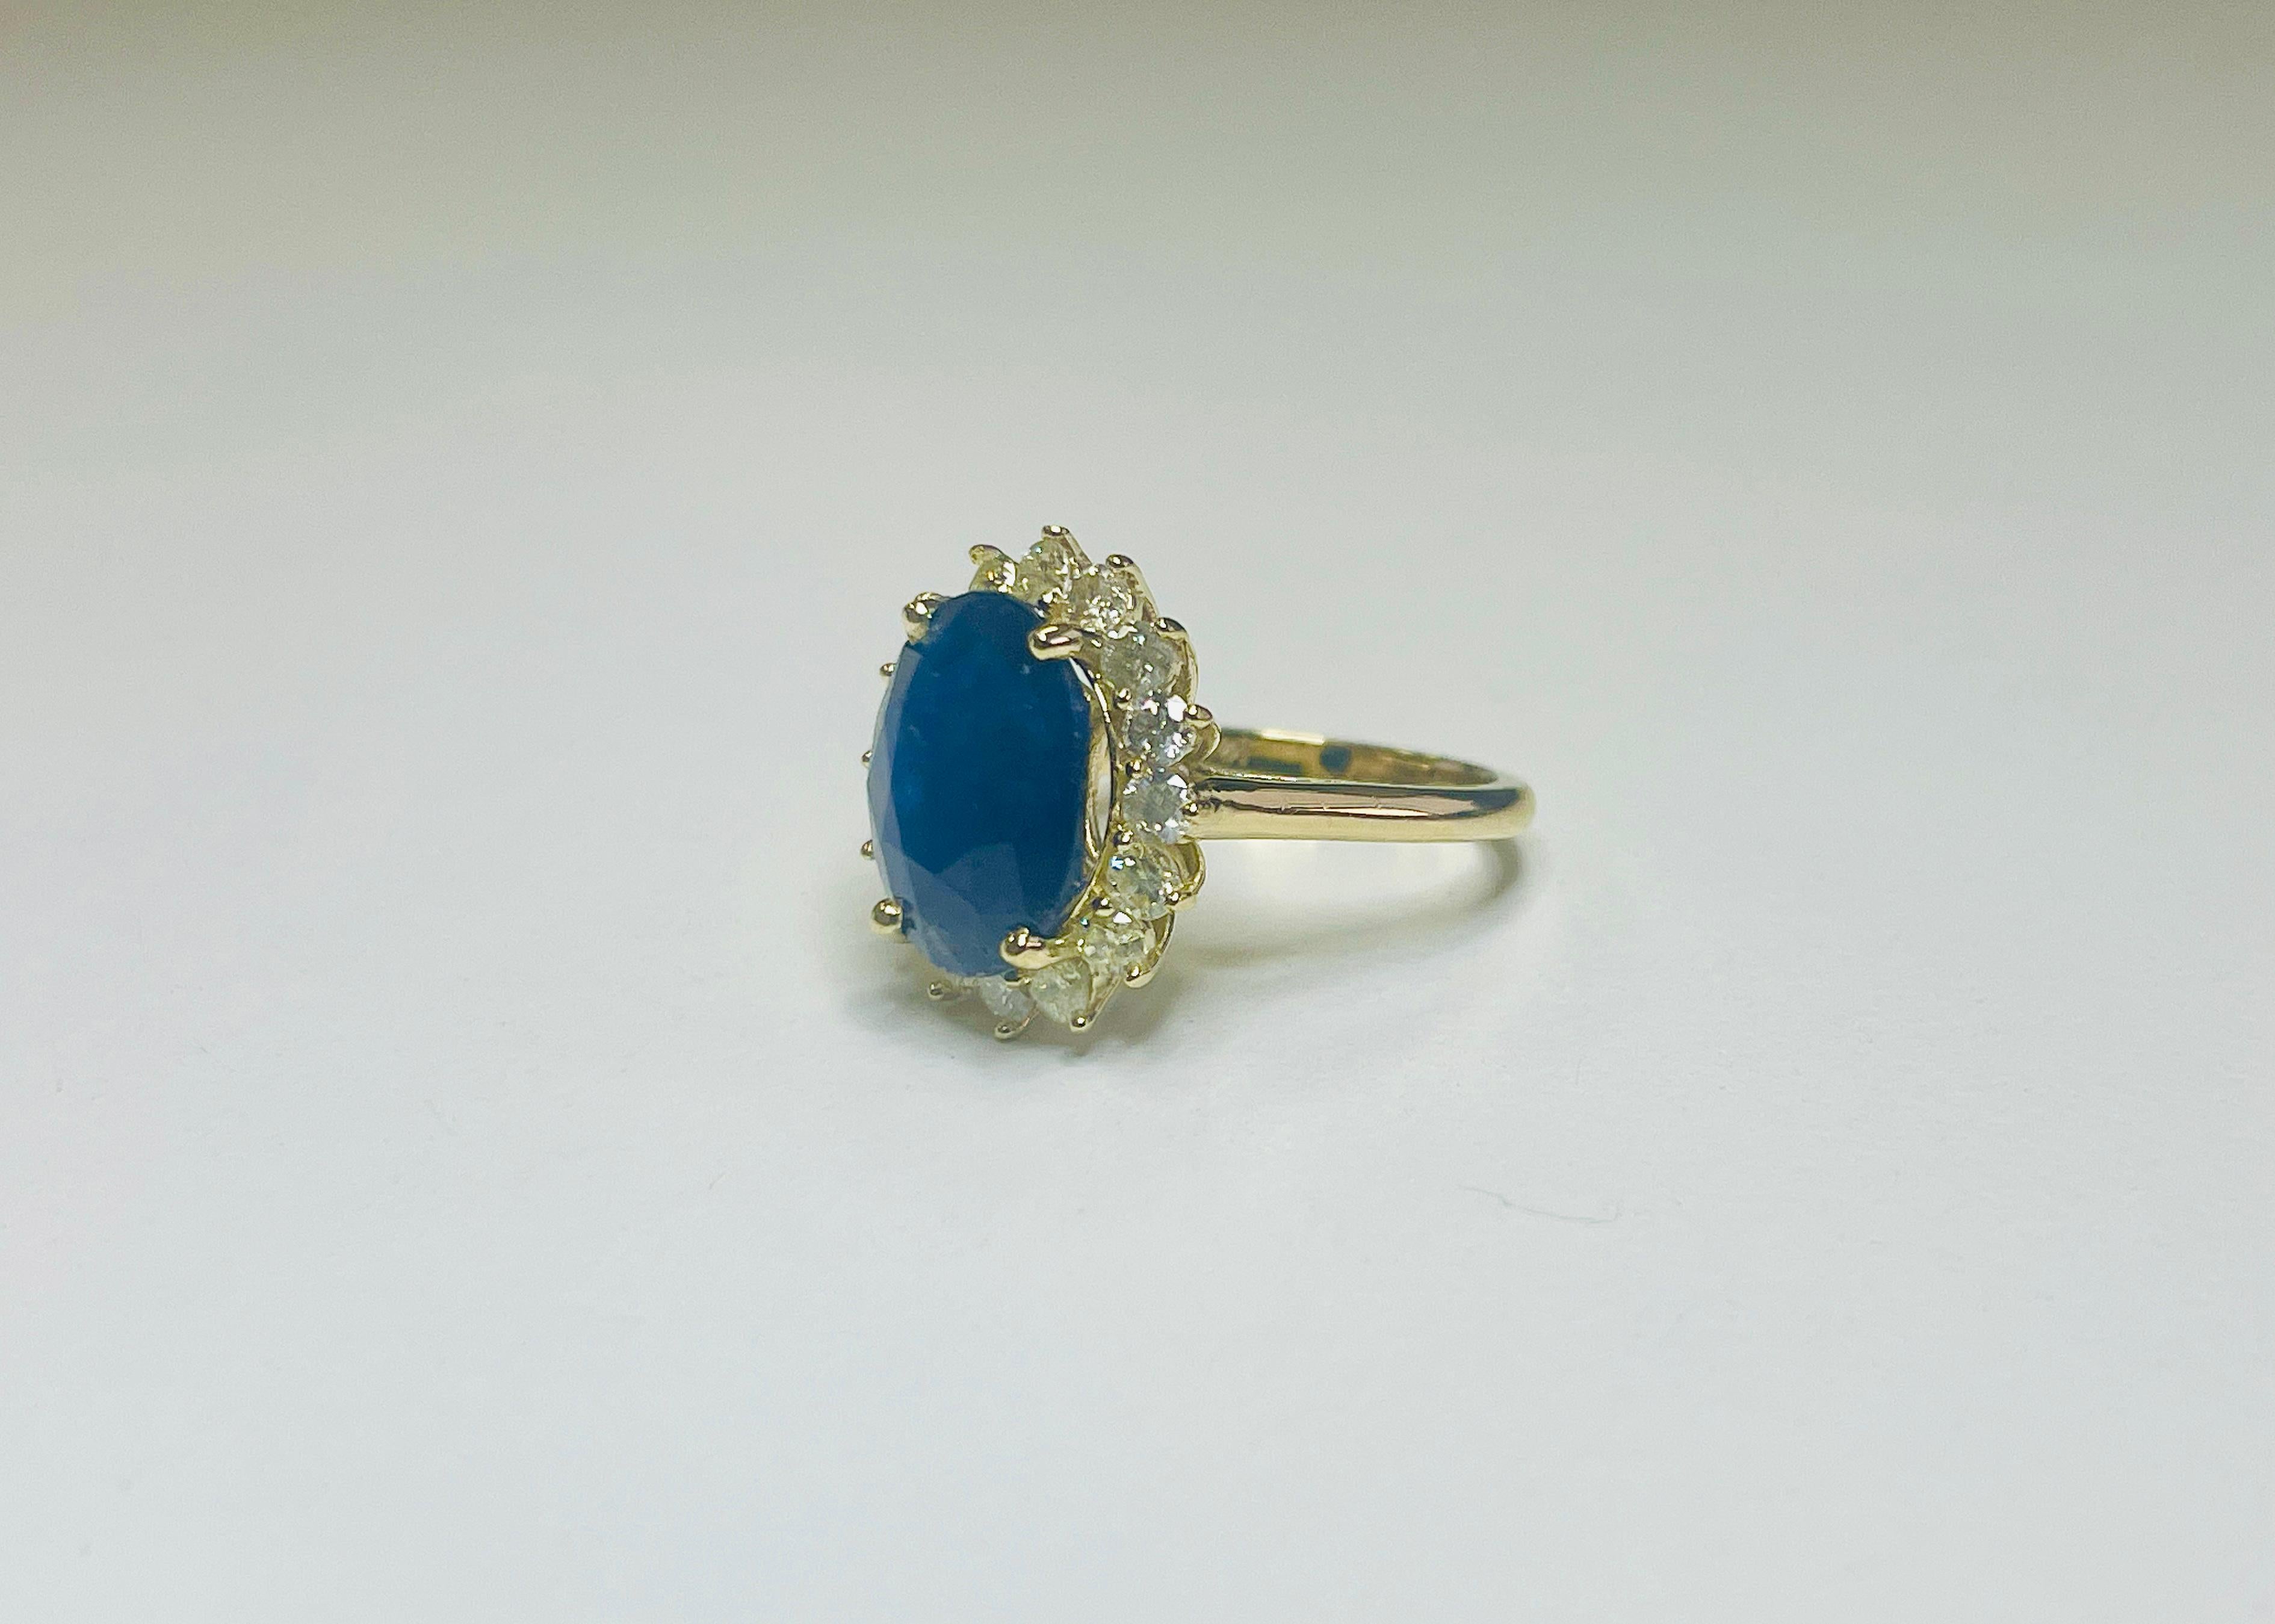 Cushion Cut 8.71 Carat Intense Blue Oval Cut Natural Sapphire 14K Yellow Gold Diamond Ring For Sale